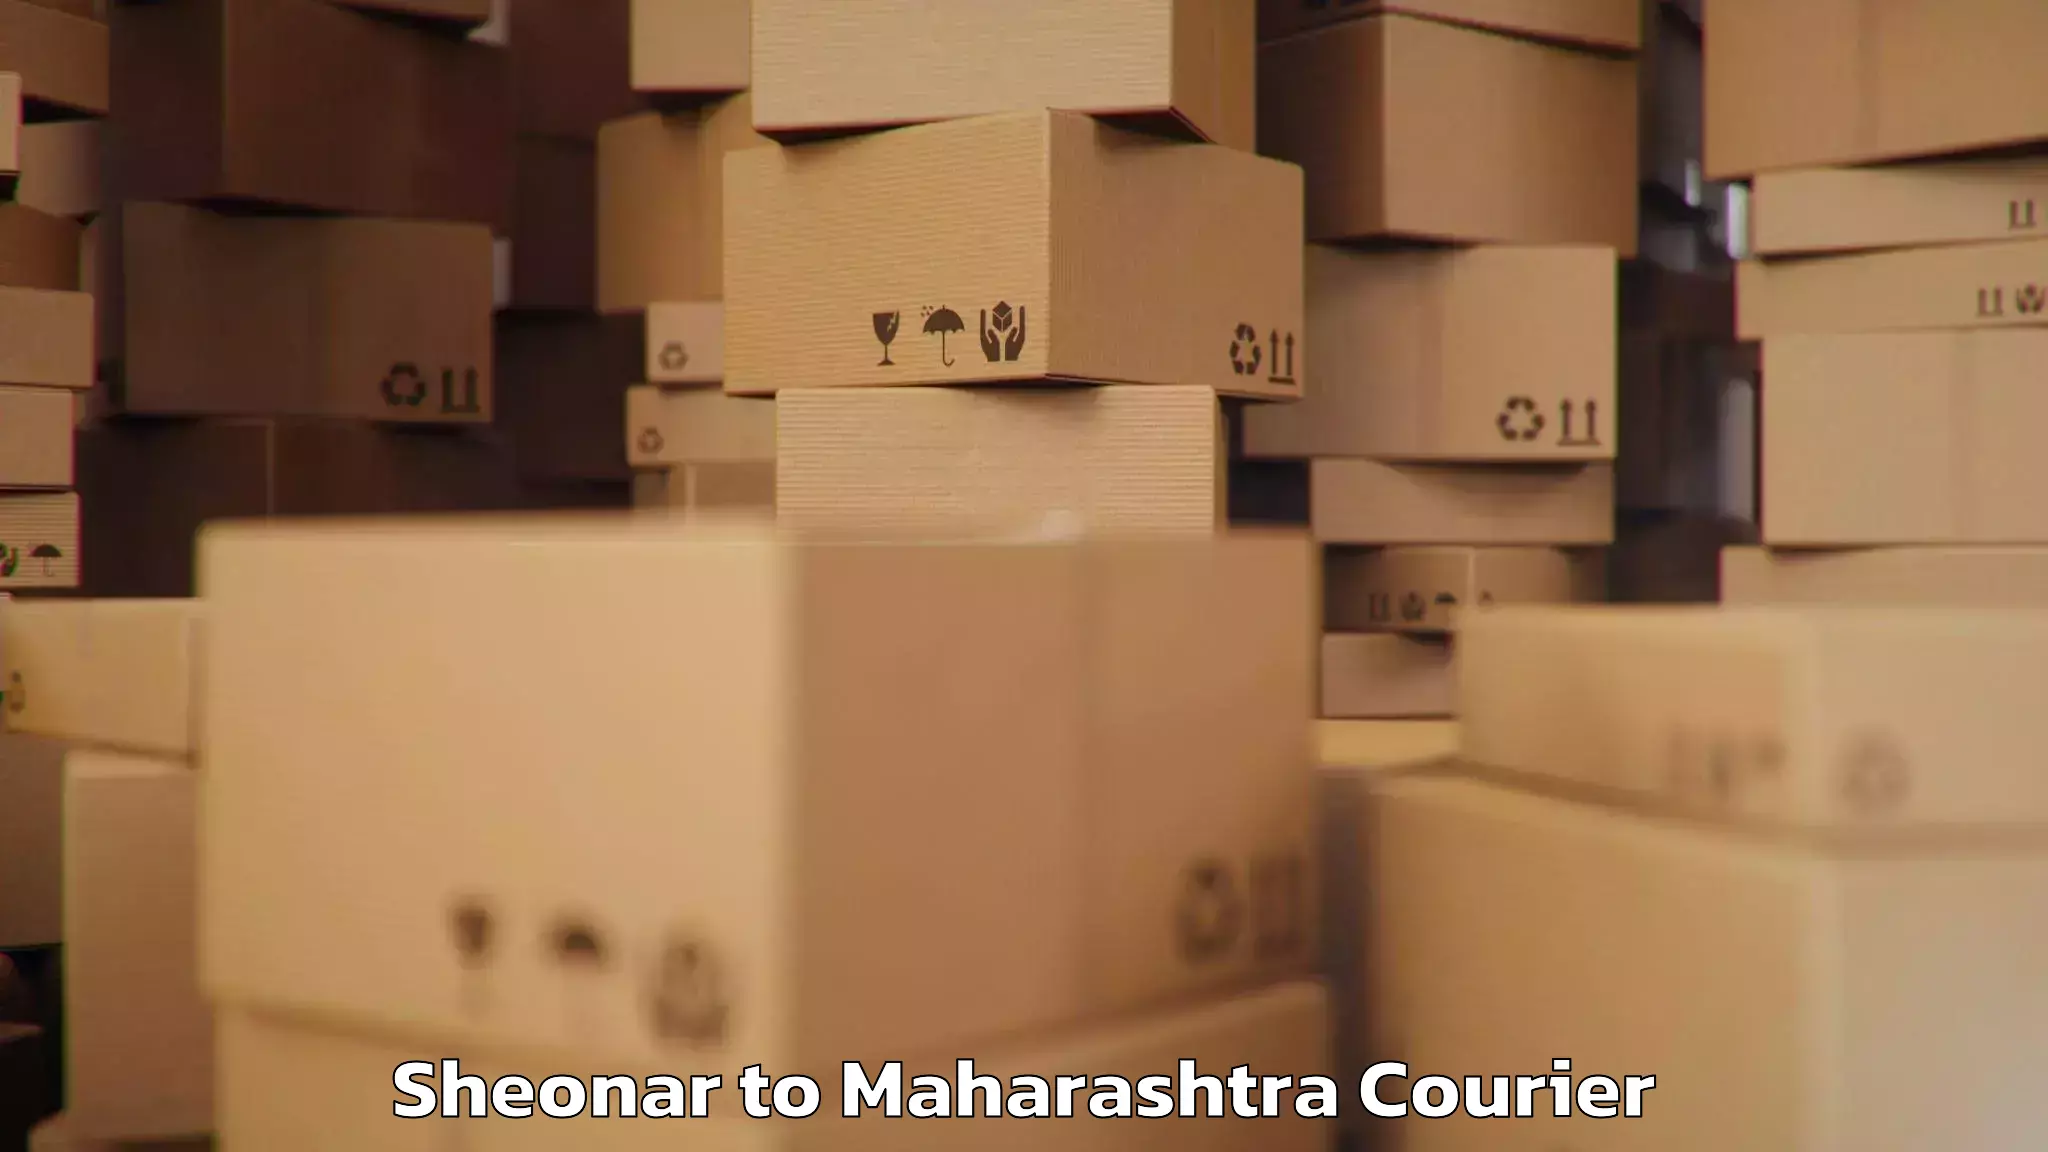 Baggage transport network Sheonar to Maharashtra